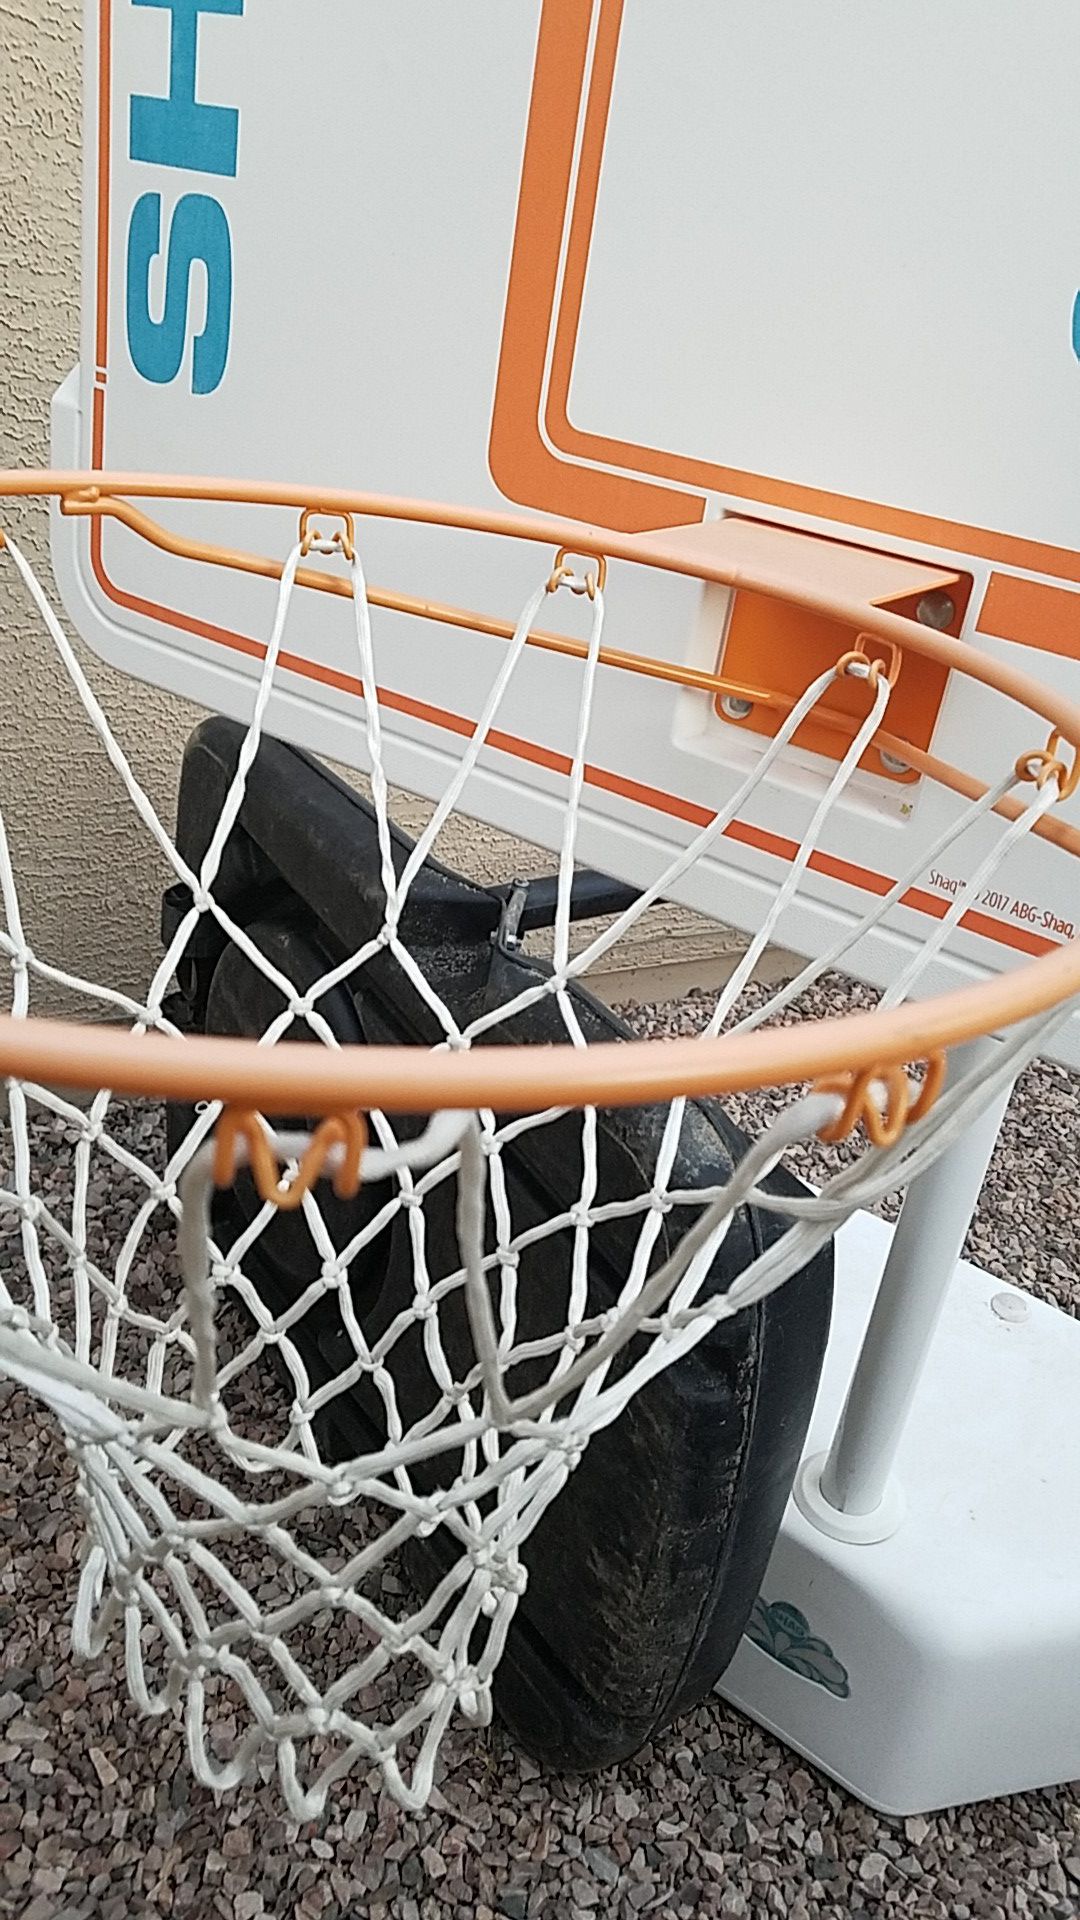 Basketball Hoop for Sale in Mesa, AZ - OfferUp